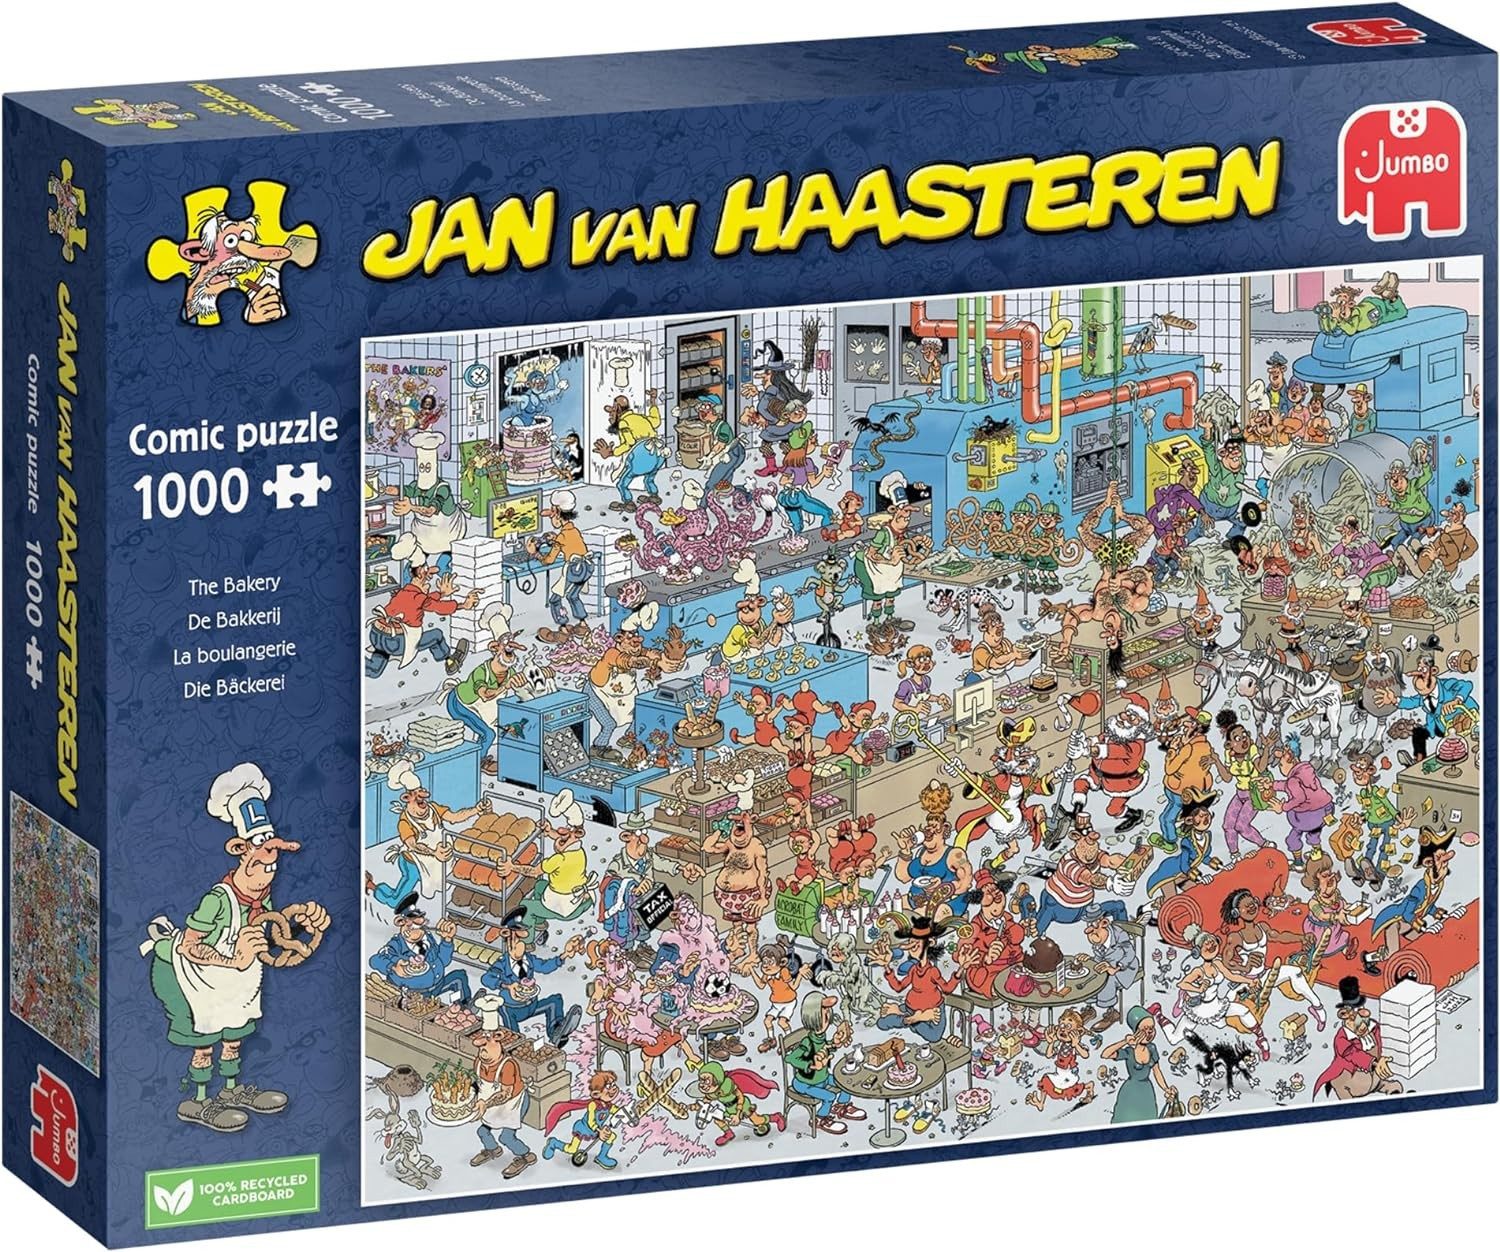 Jumbo Spiele Puzzle Jumbo 1110100310 - Jan van Haasteren, Die Bäckerei, Comic-Puzzle, 1..., Puzzleteile